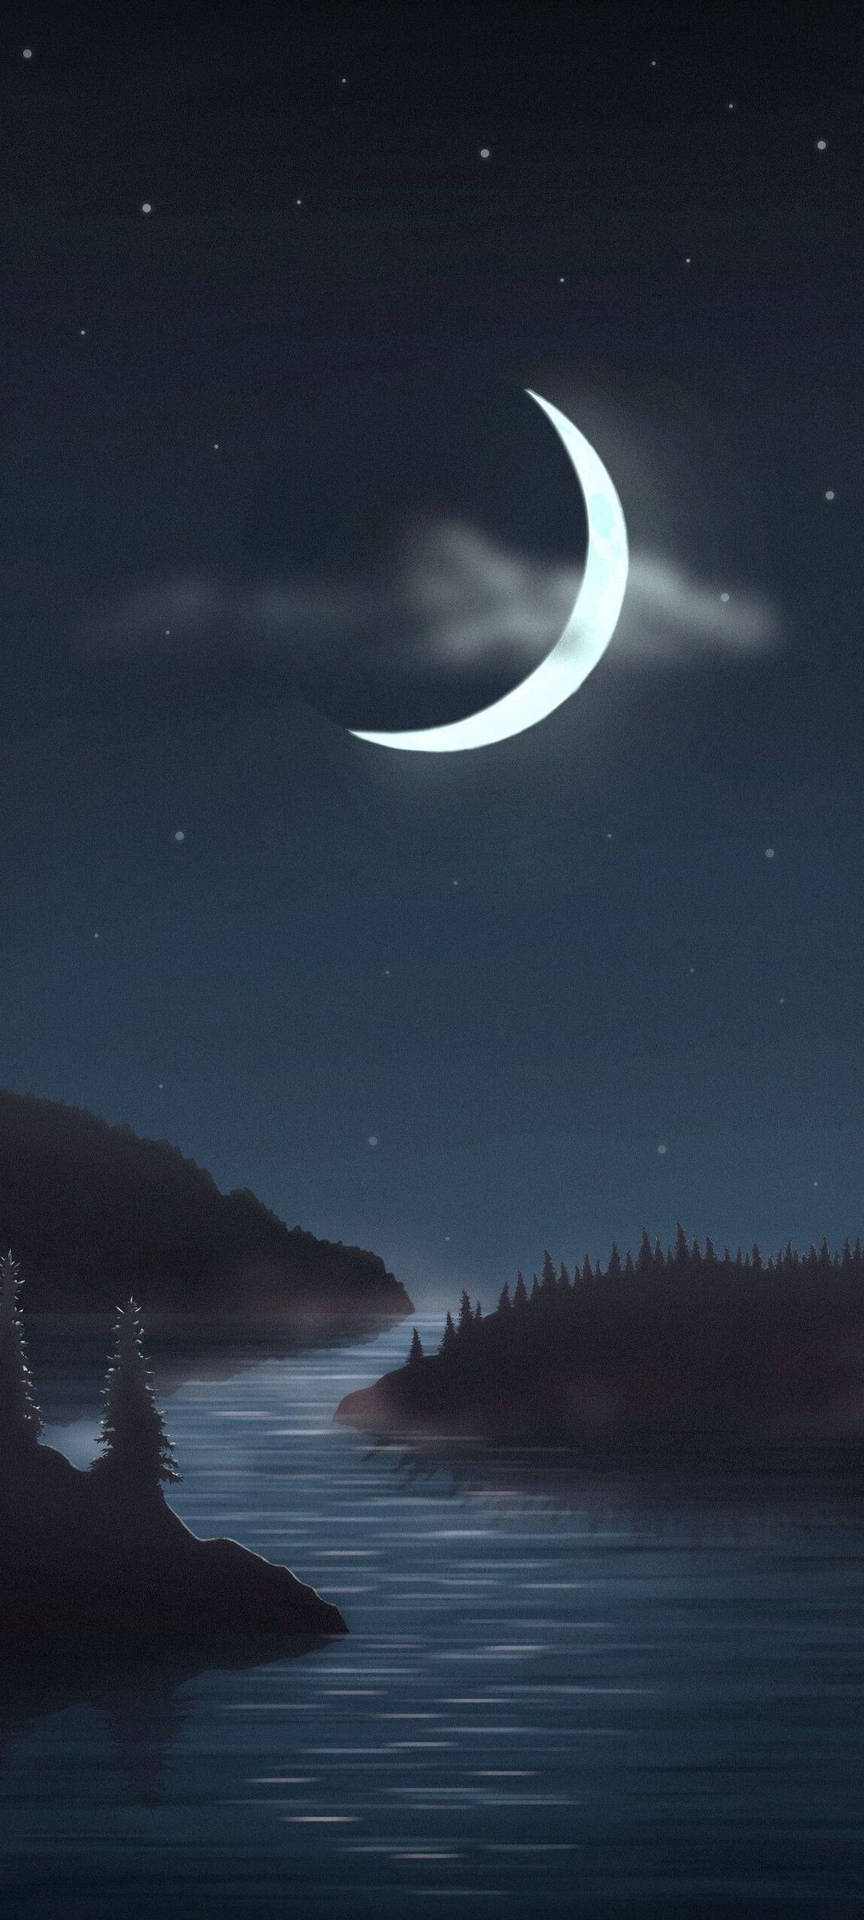 Dark Night Sky And Crescent Moon